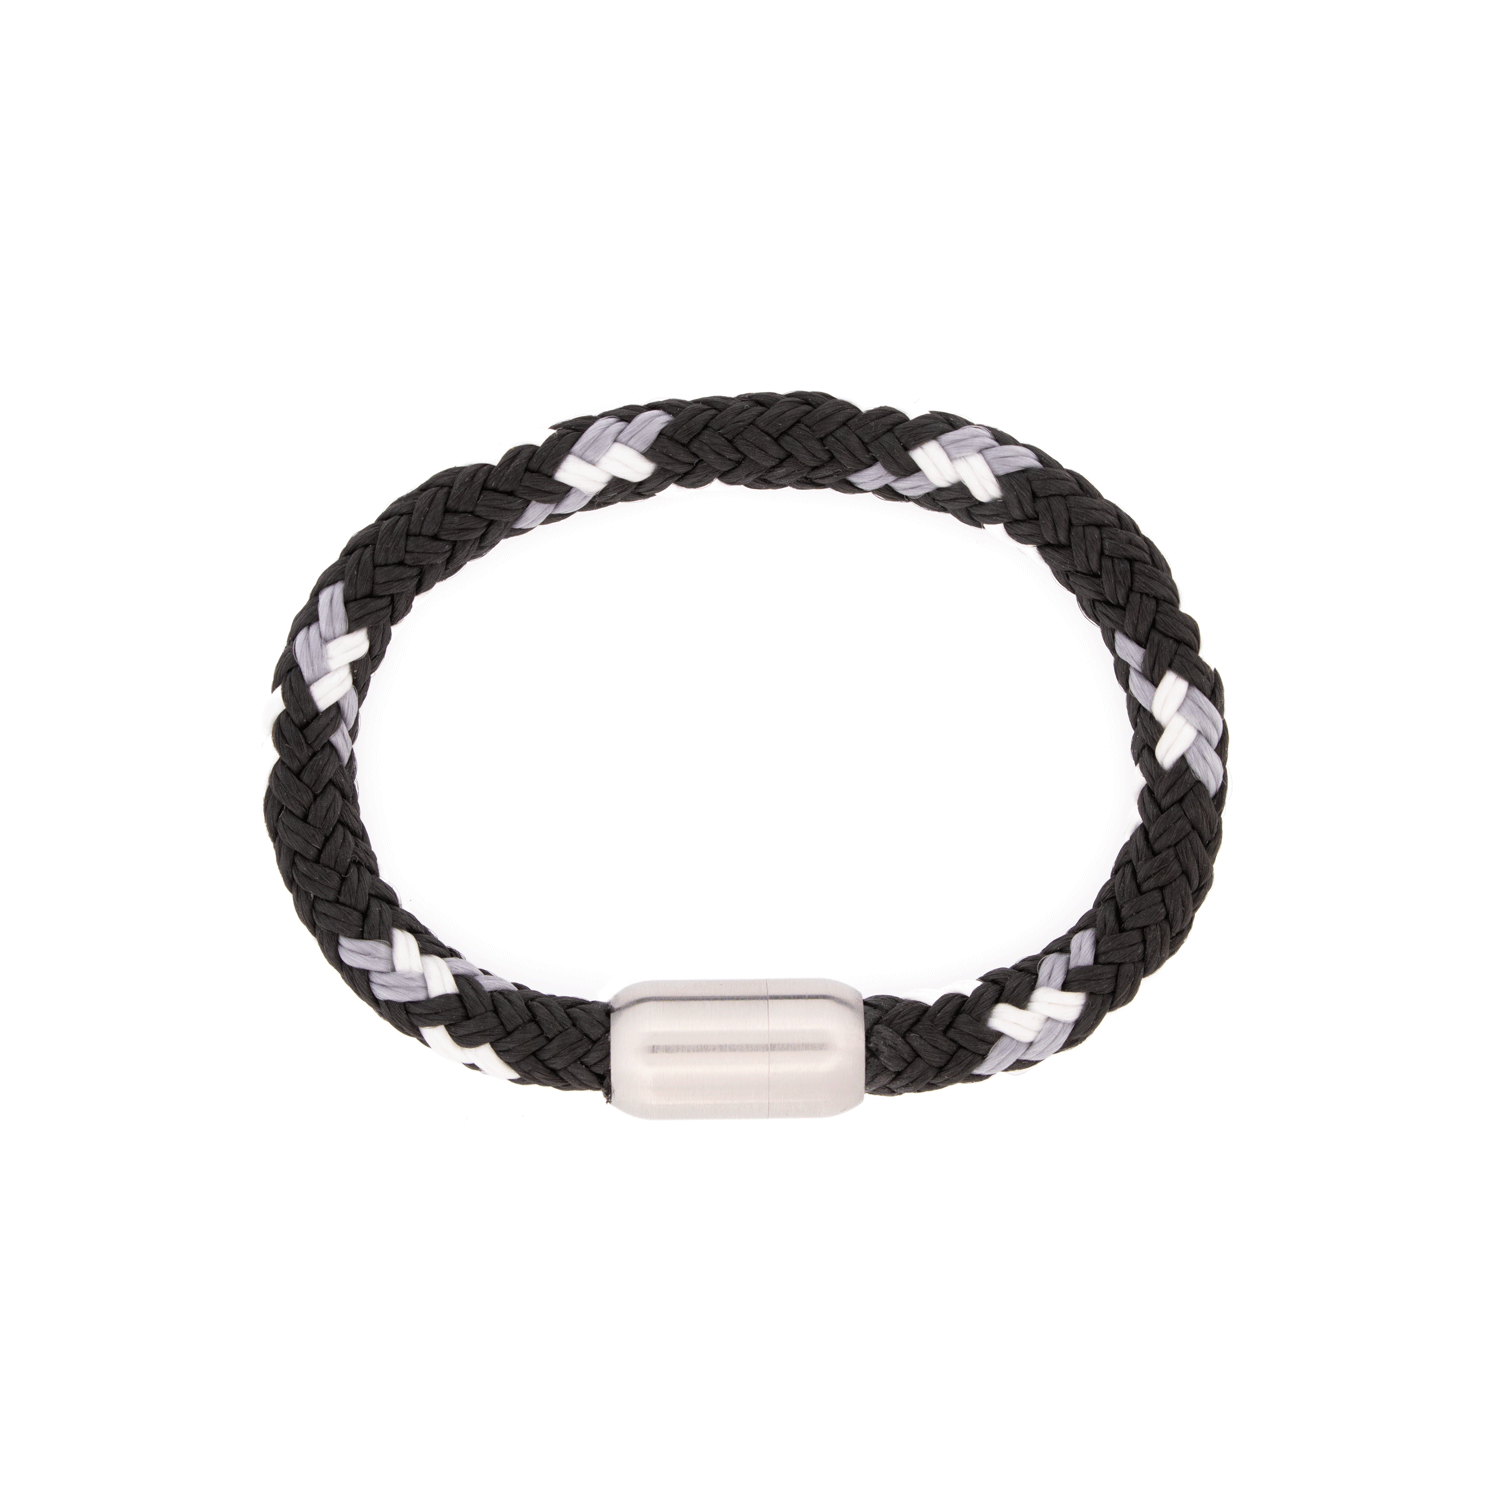 AMSTERDAM SIERAAD - Bracelet Leather Black and white